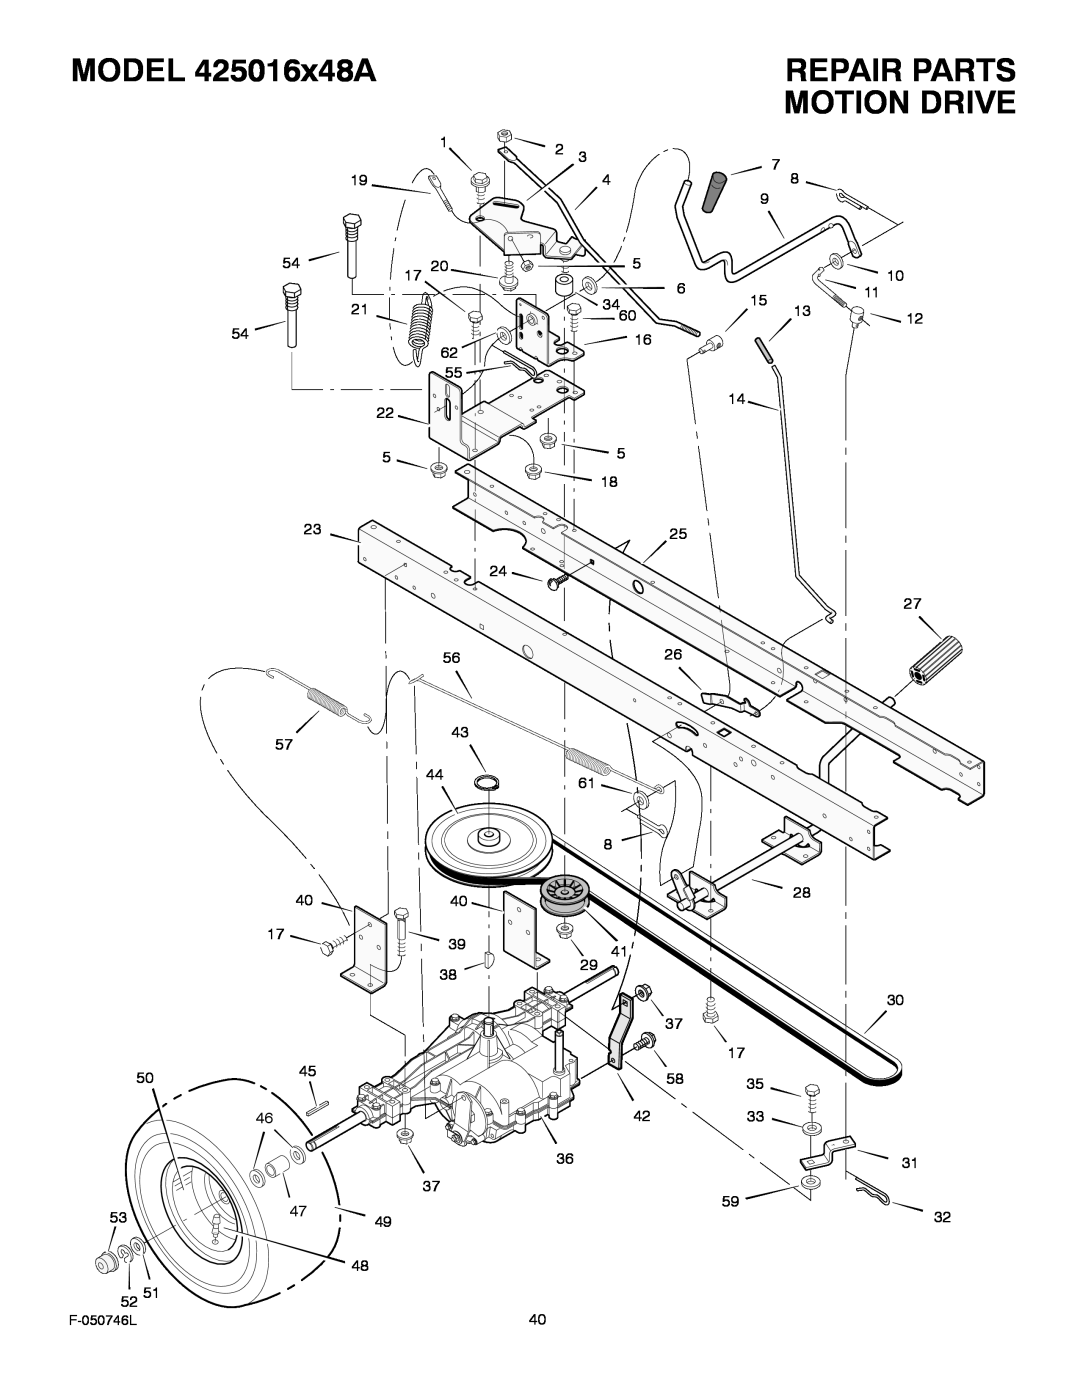 Murray manual Motion Drive, MODEL 425016x48A, Repair Parts 